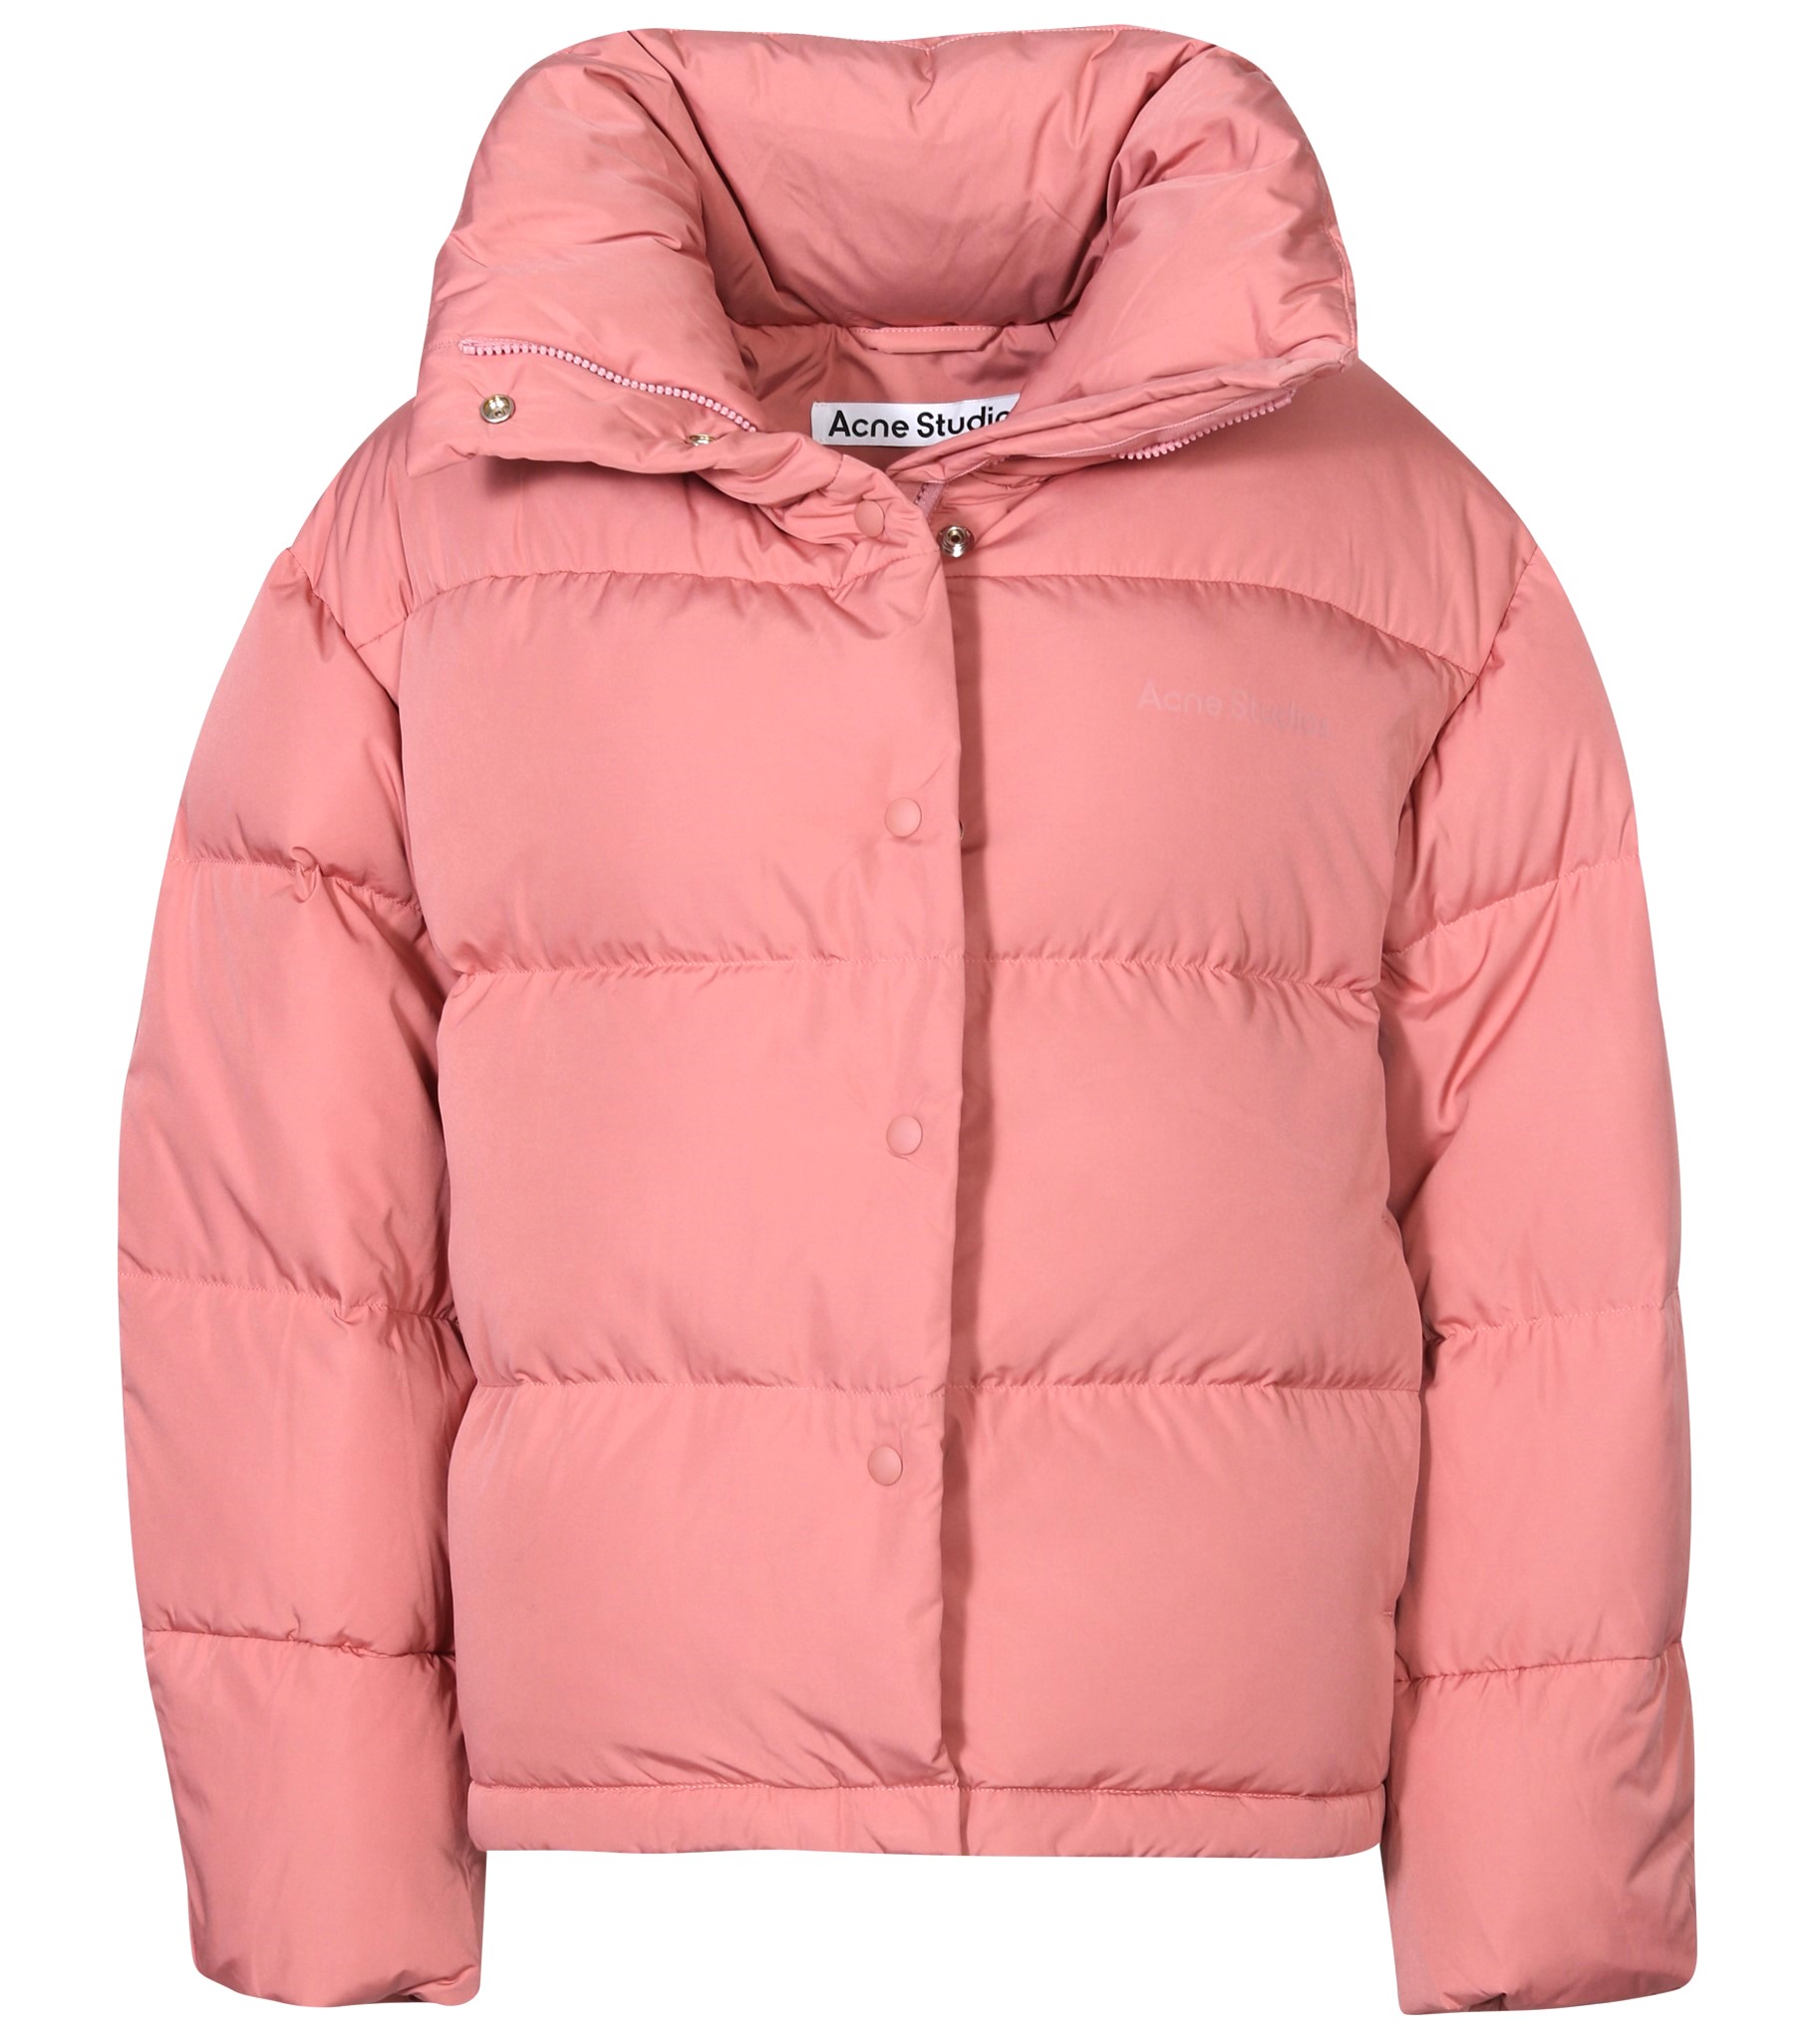 ACNE STUDIOS Puffer Jacket in Blush Pink 34